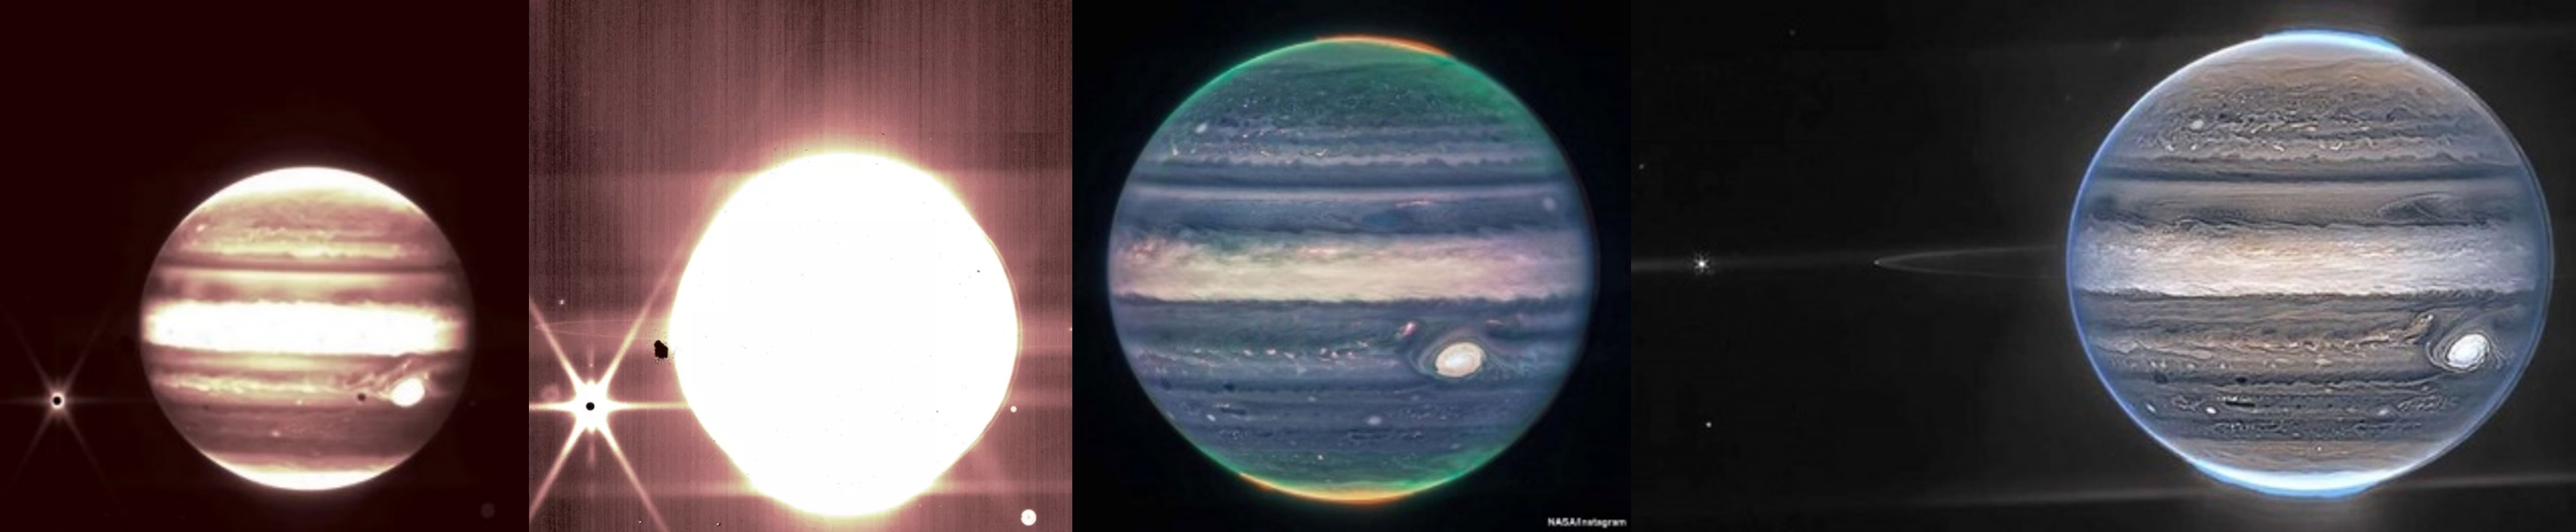 James Webb Space Telescope Jupiter